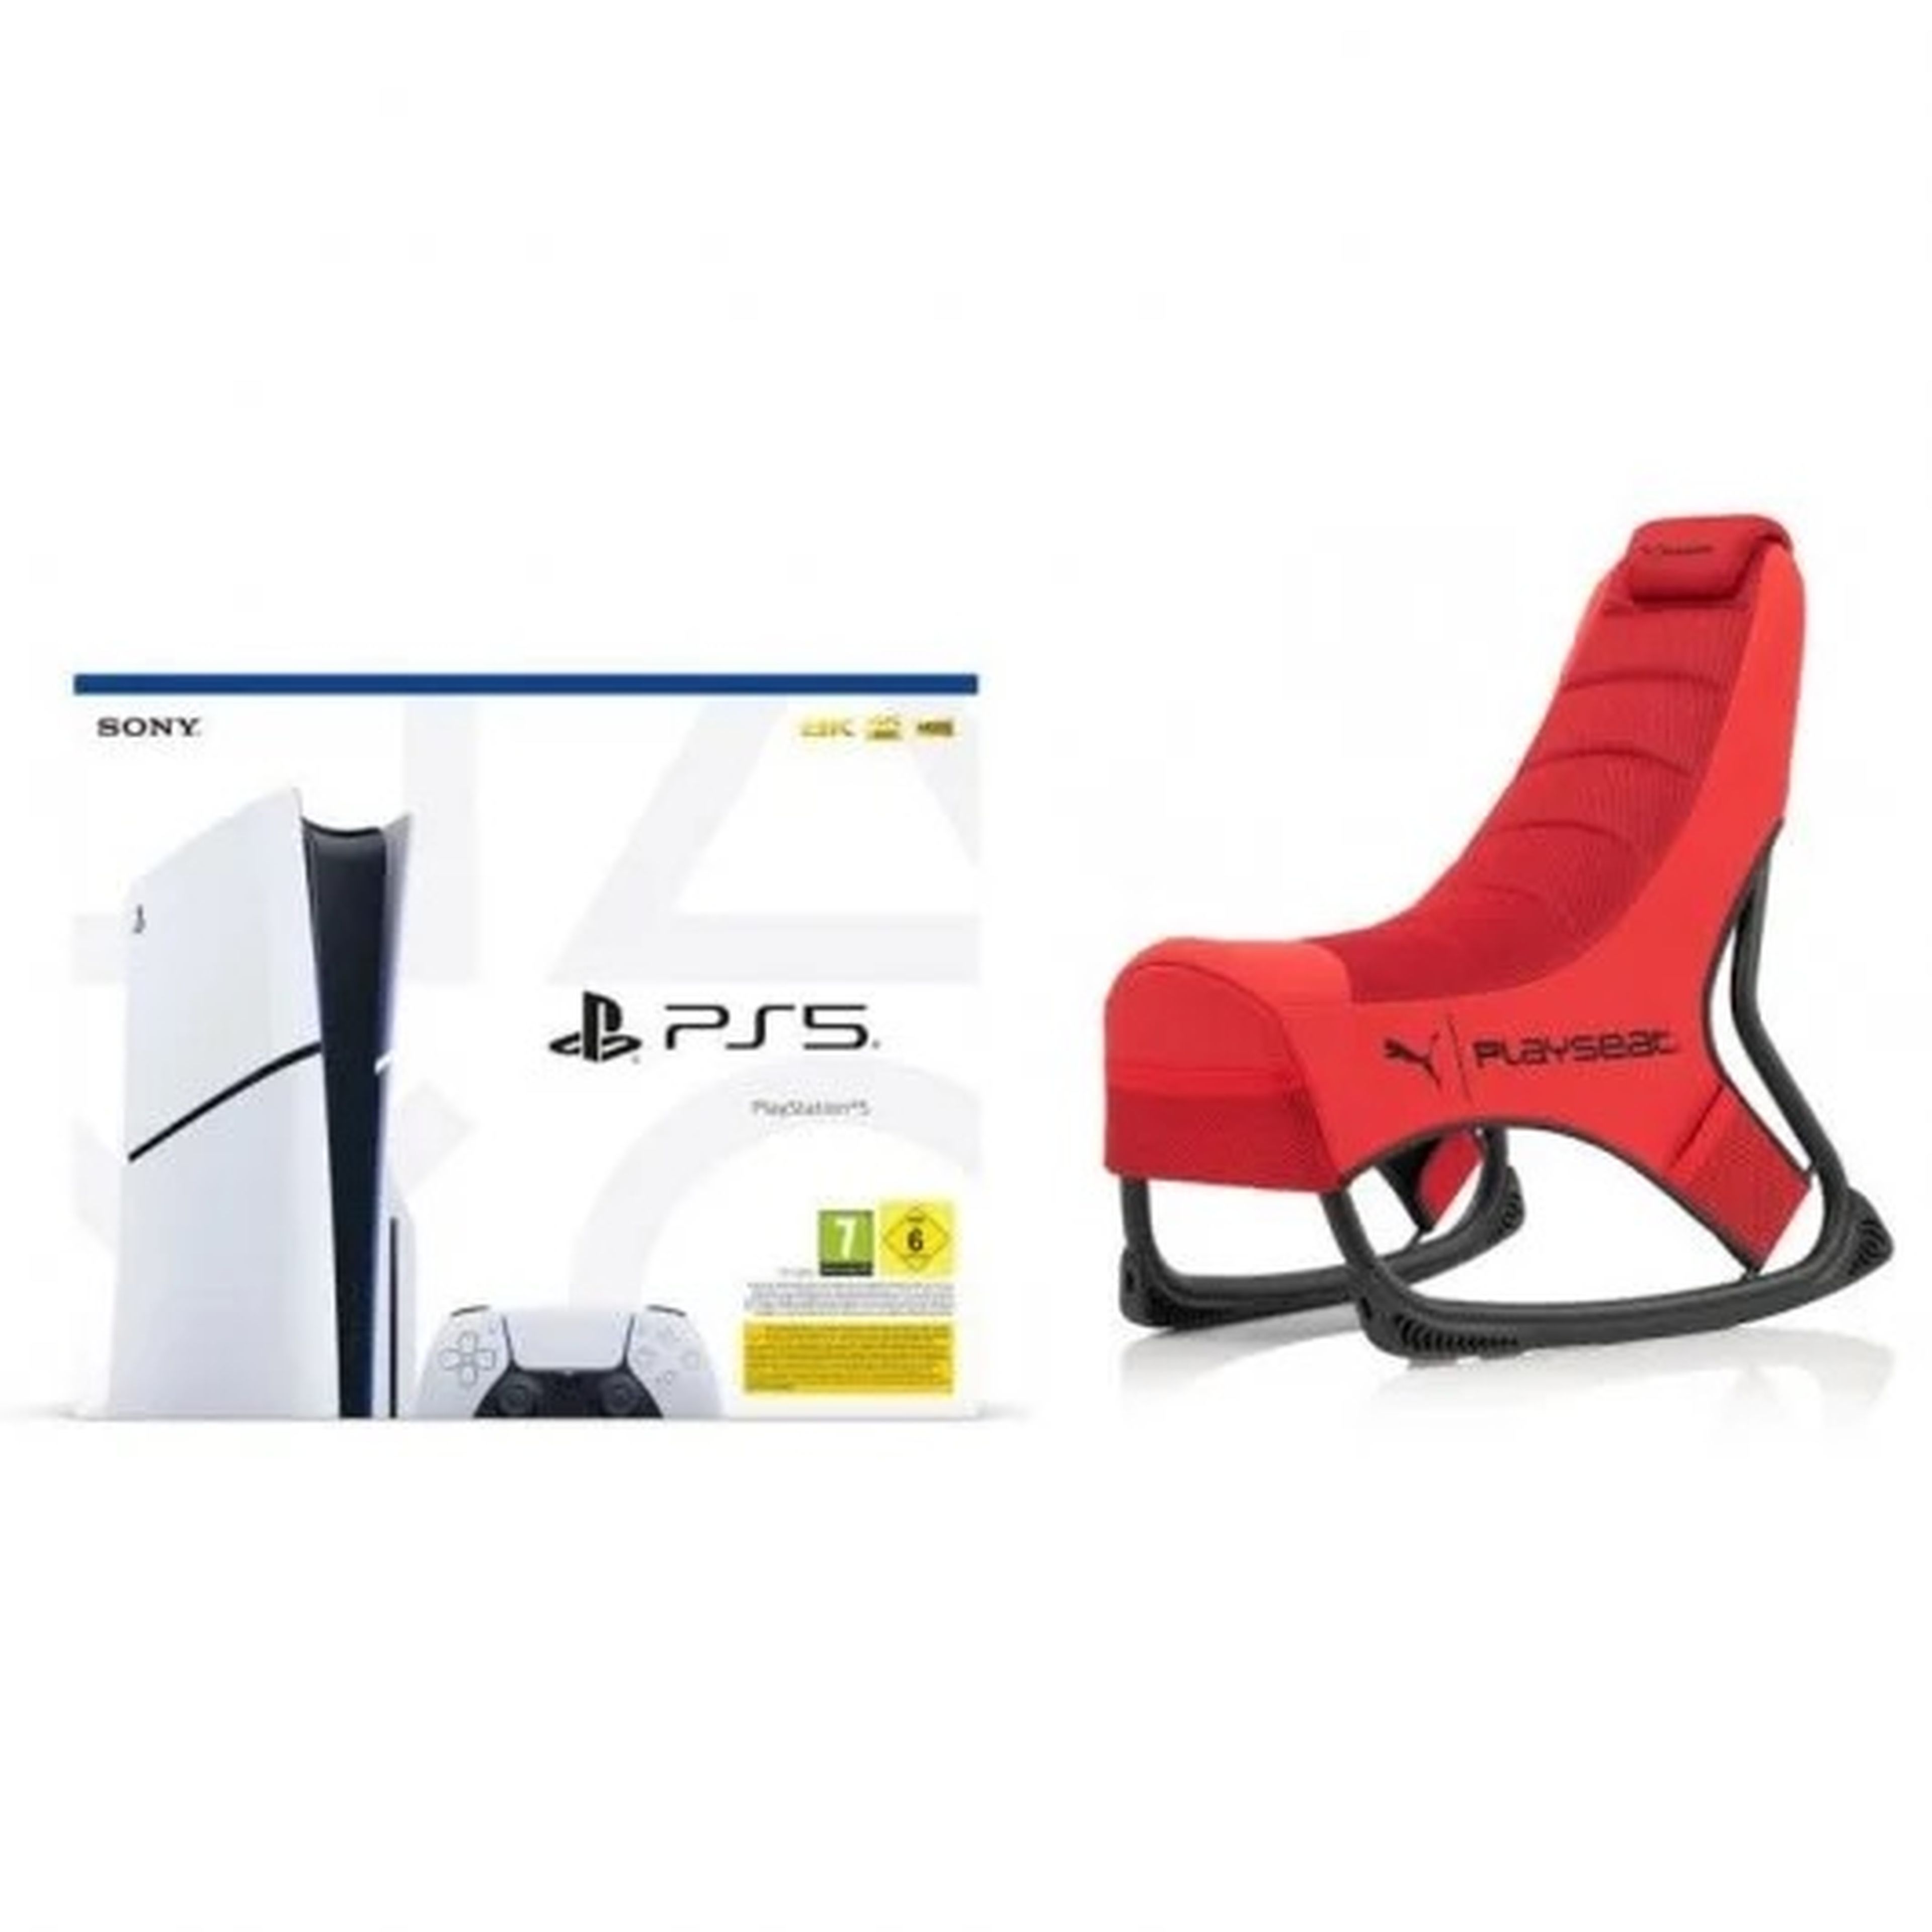 Sony PlayStation 5 Slim + Playseat Puma Active Gaming Seat